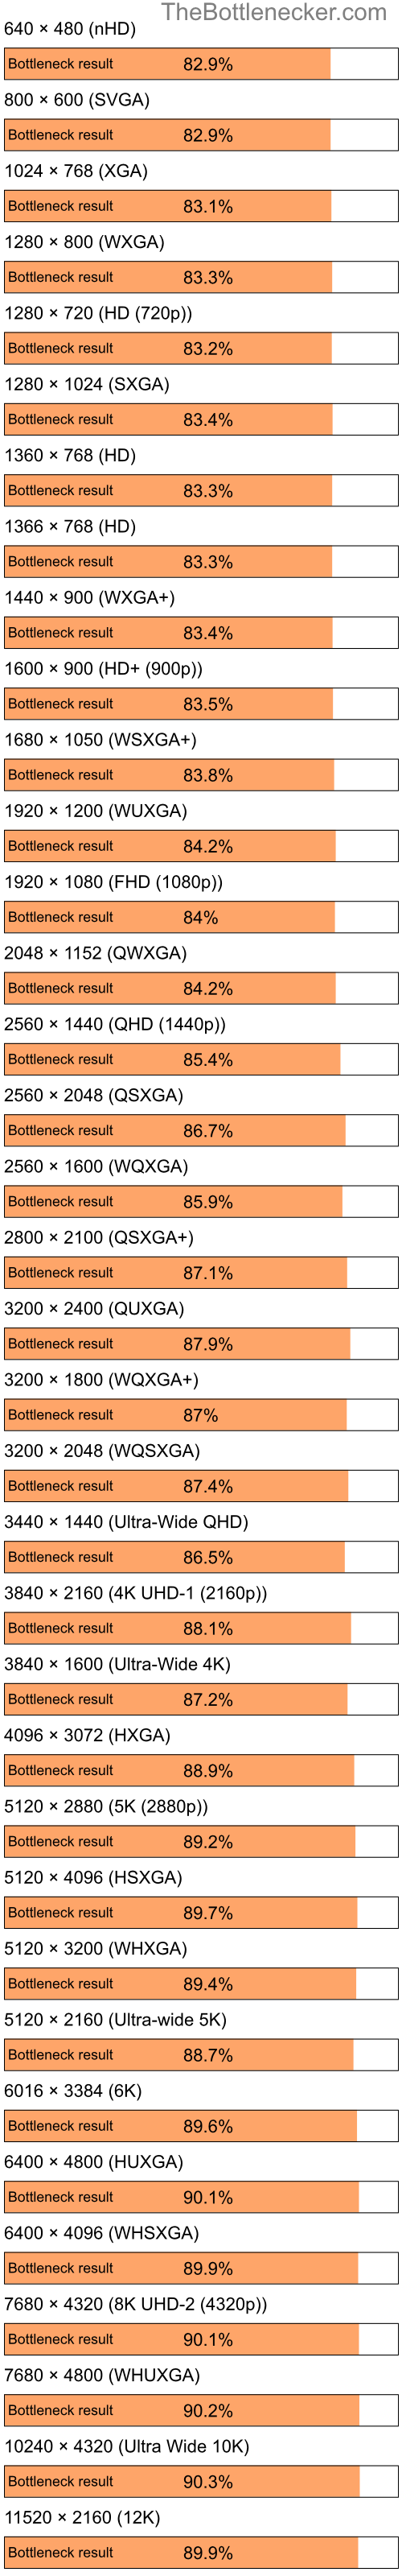 Bottleneck results by resolution for Intel Celeron M and NVIDIA GeForce 6100 nForce 405 in Graphic Card Intense Tasks